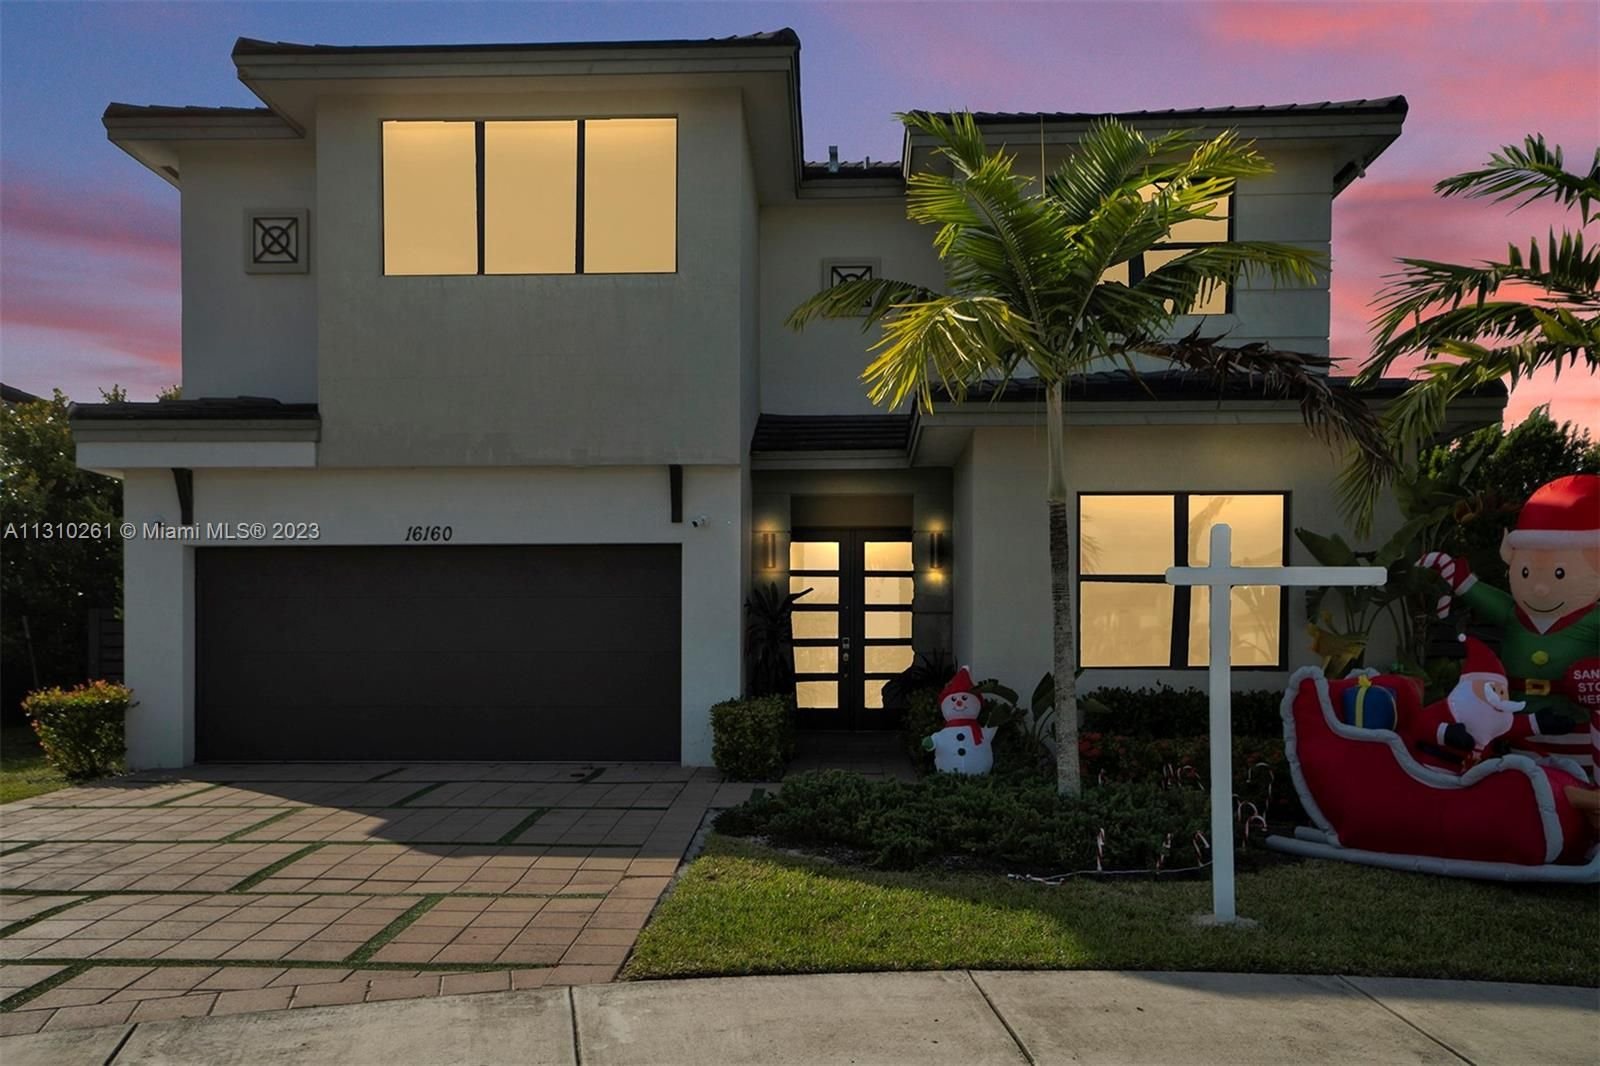 Real estate property located at 16160 91 Ct, Miami-Dade County, Miami Lakes, FL